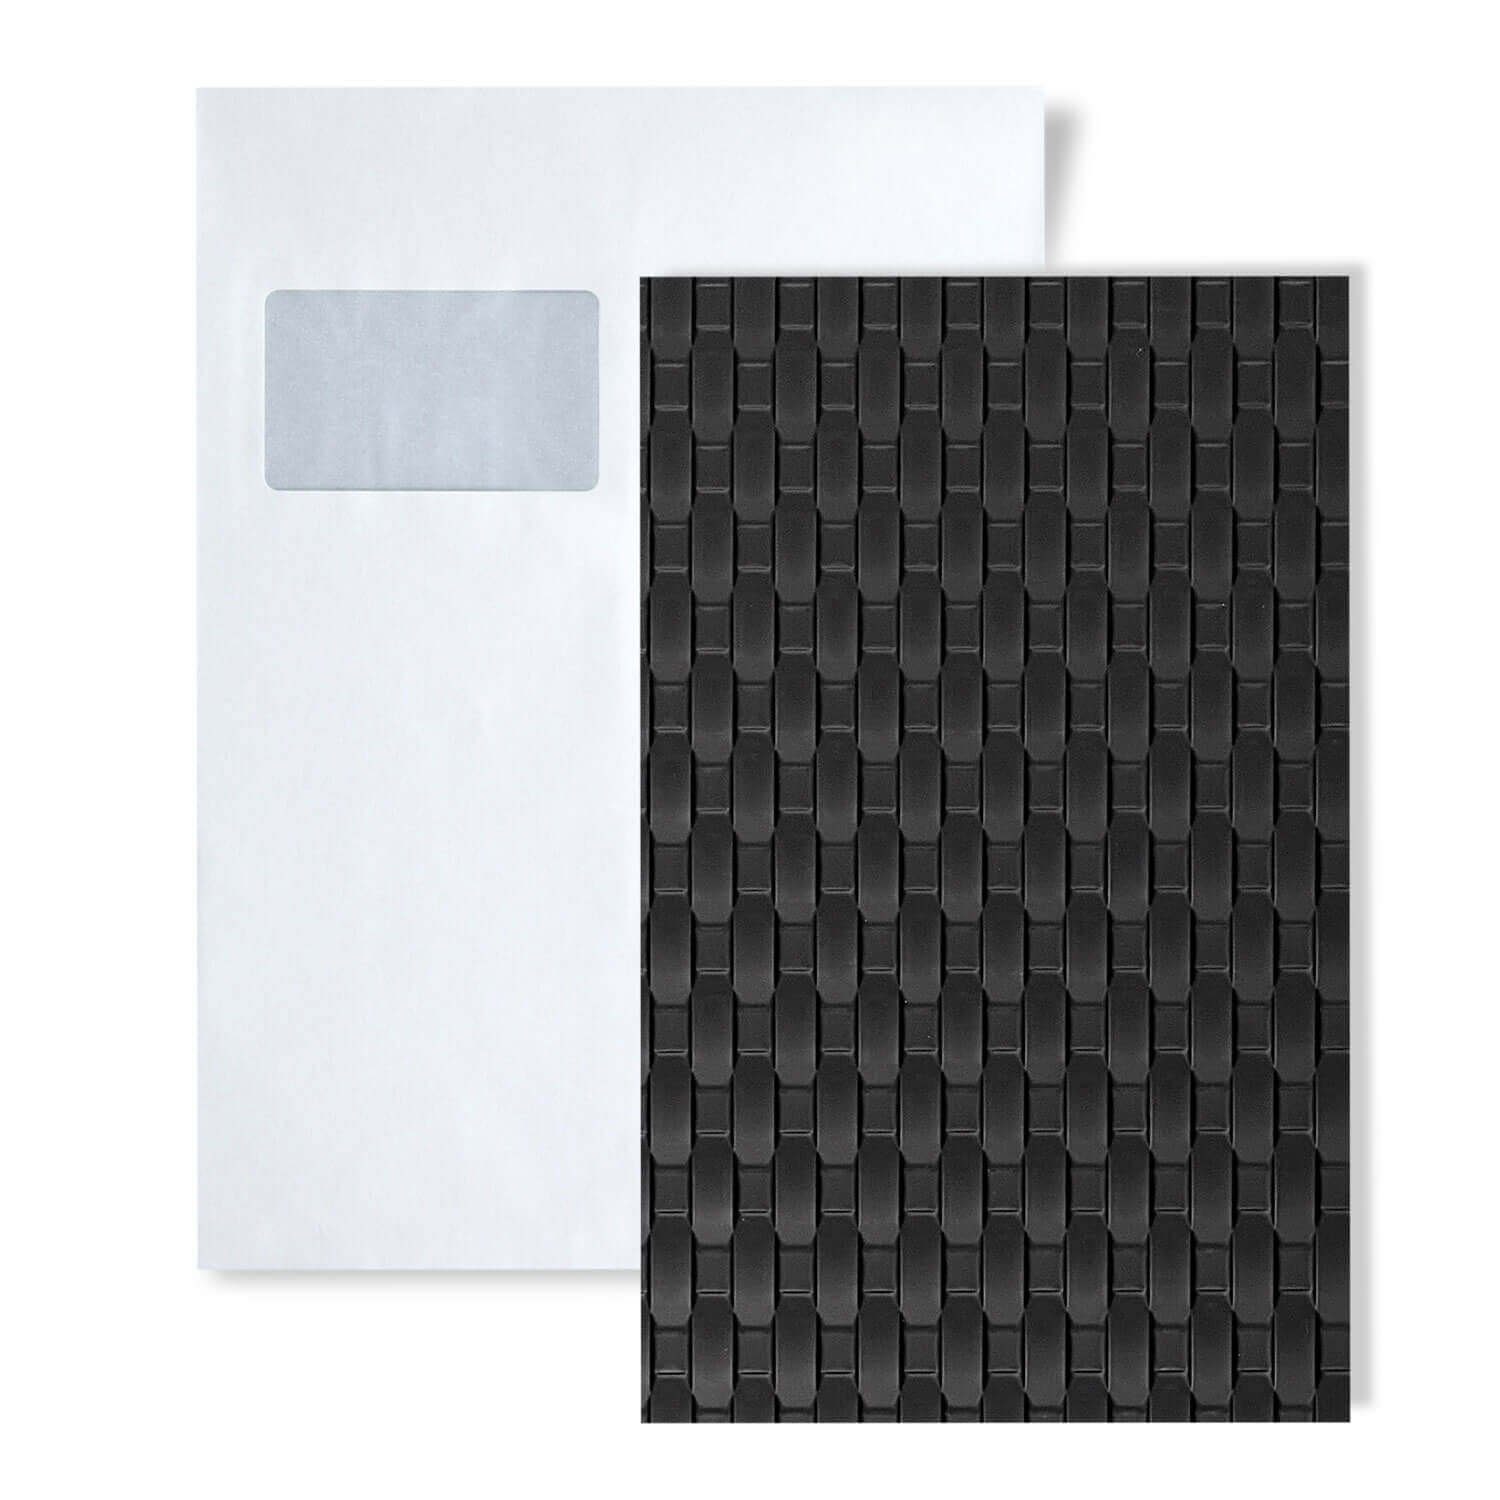 Wallface Wandpaneel S-24953-SA, BxL: 15x20 cm, (1 MUSTERSTÜCK, Produktmuster, Muster des Wandpaneels) schwarz